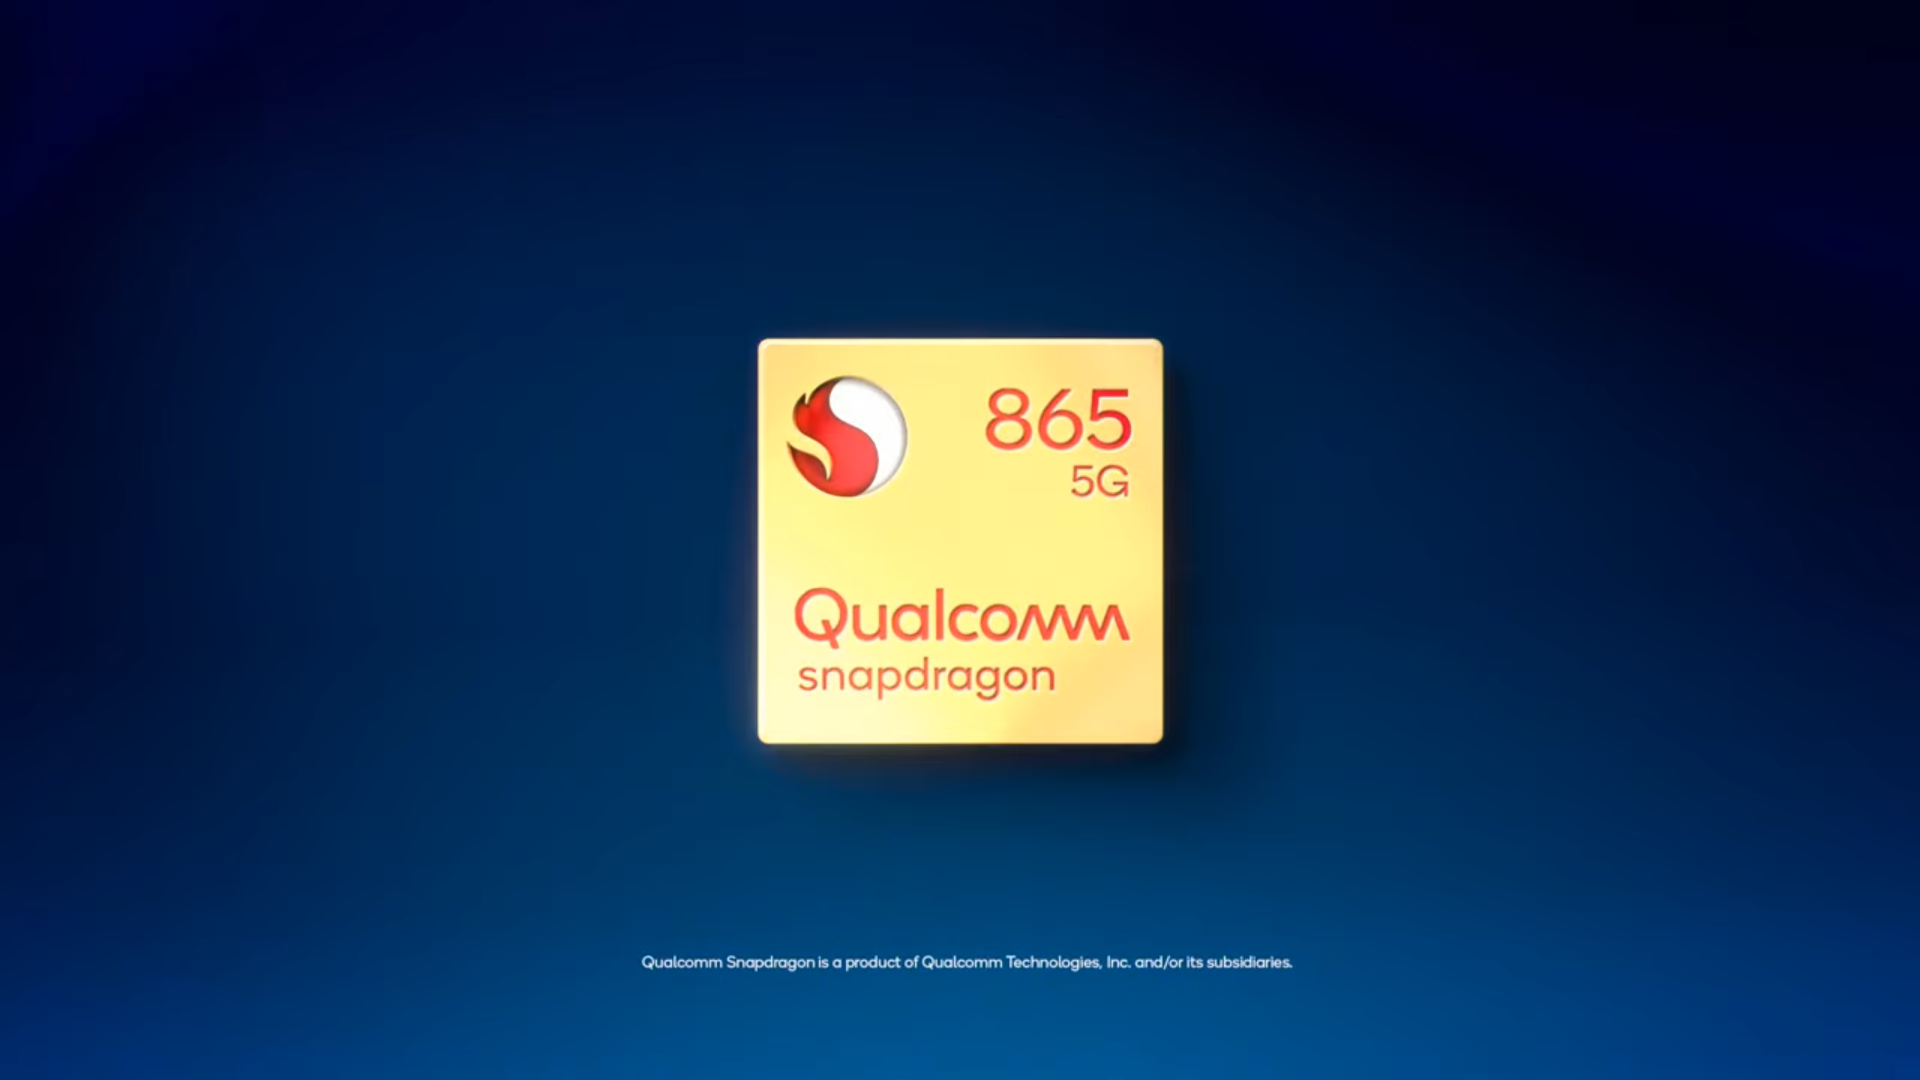 Qualcomm Snapdragon 865 announced